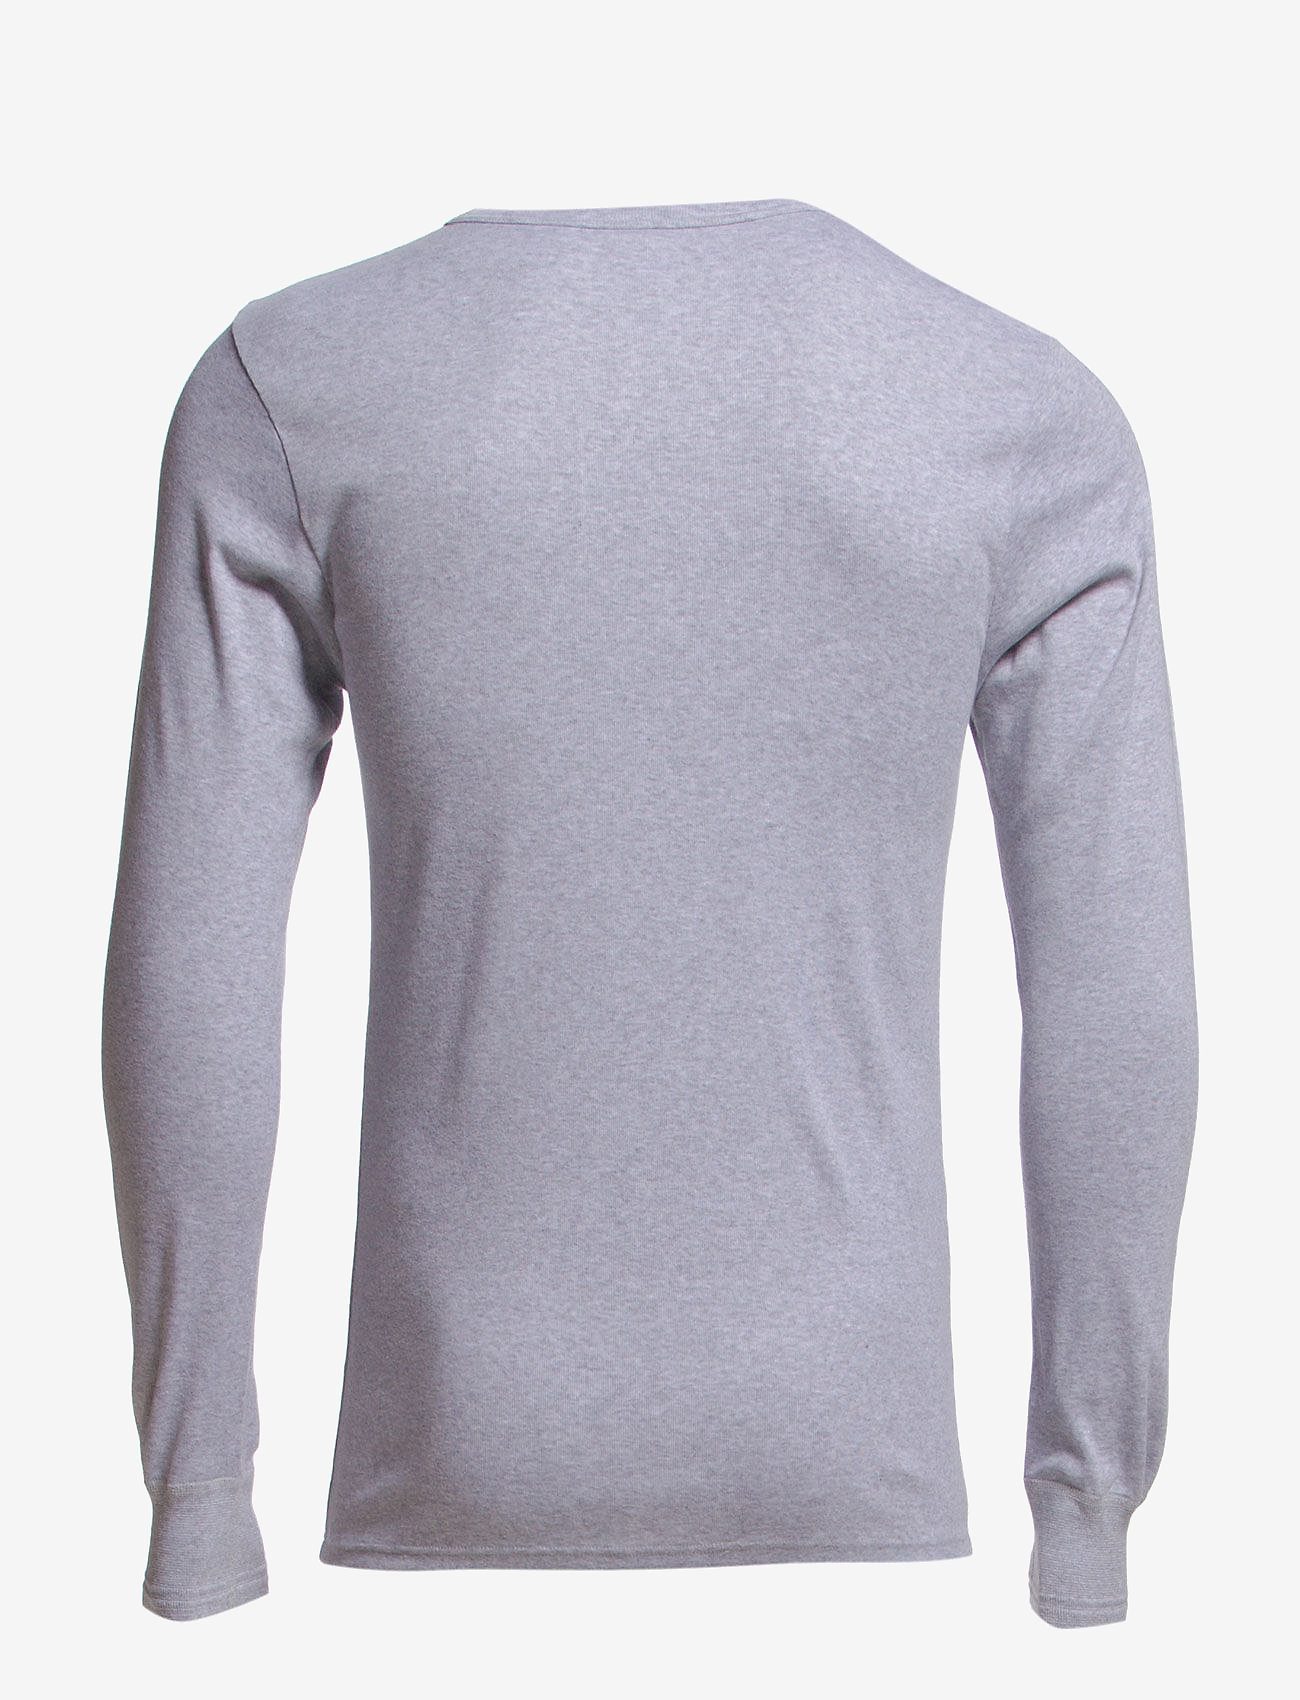 Dovre - Dovre T-shirt Long sleeves - basic t-shirts - grey melan - 1